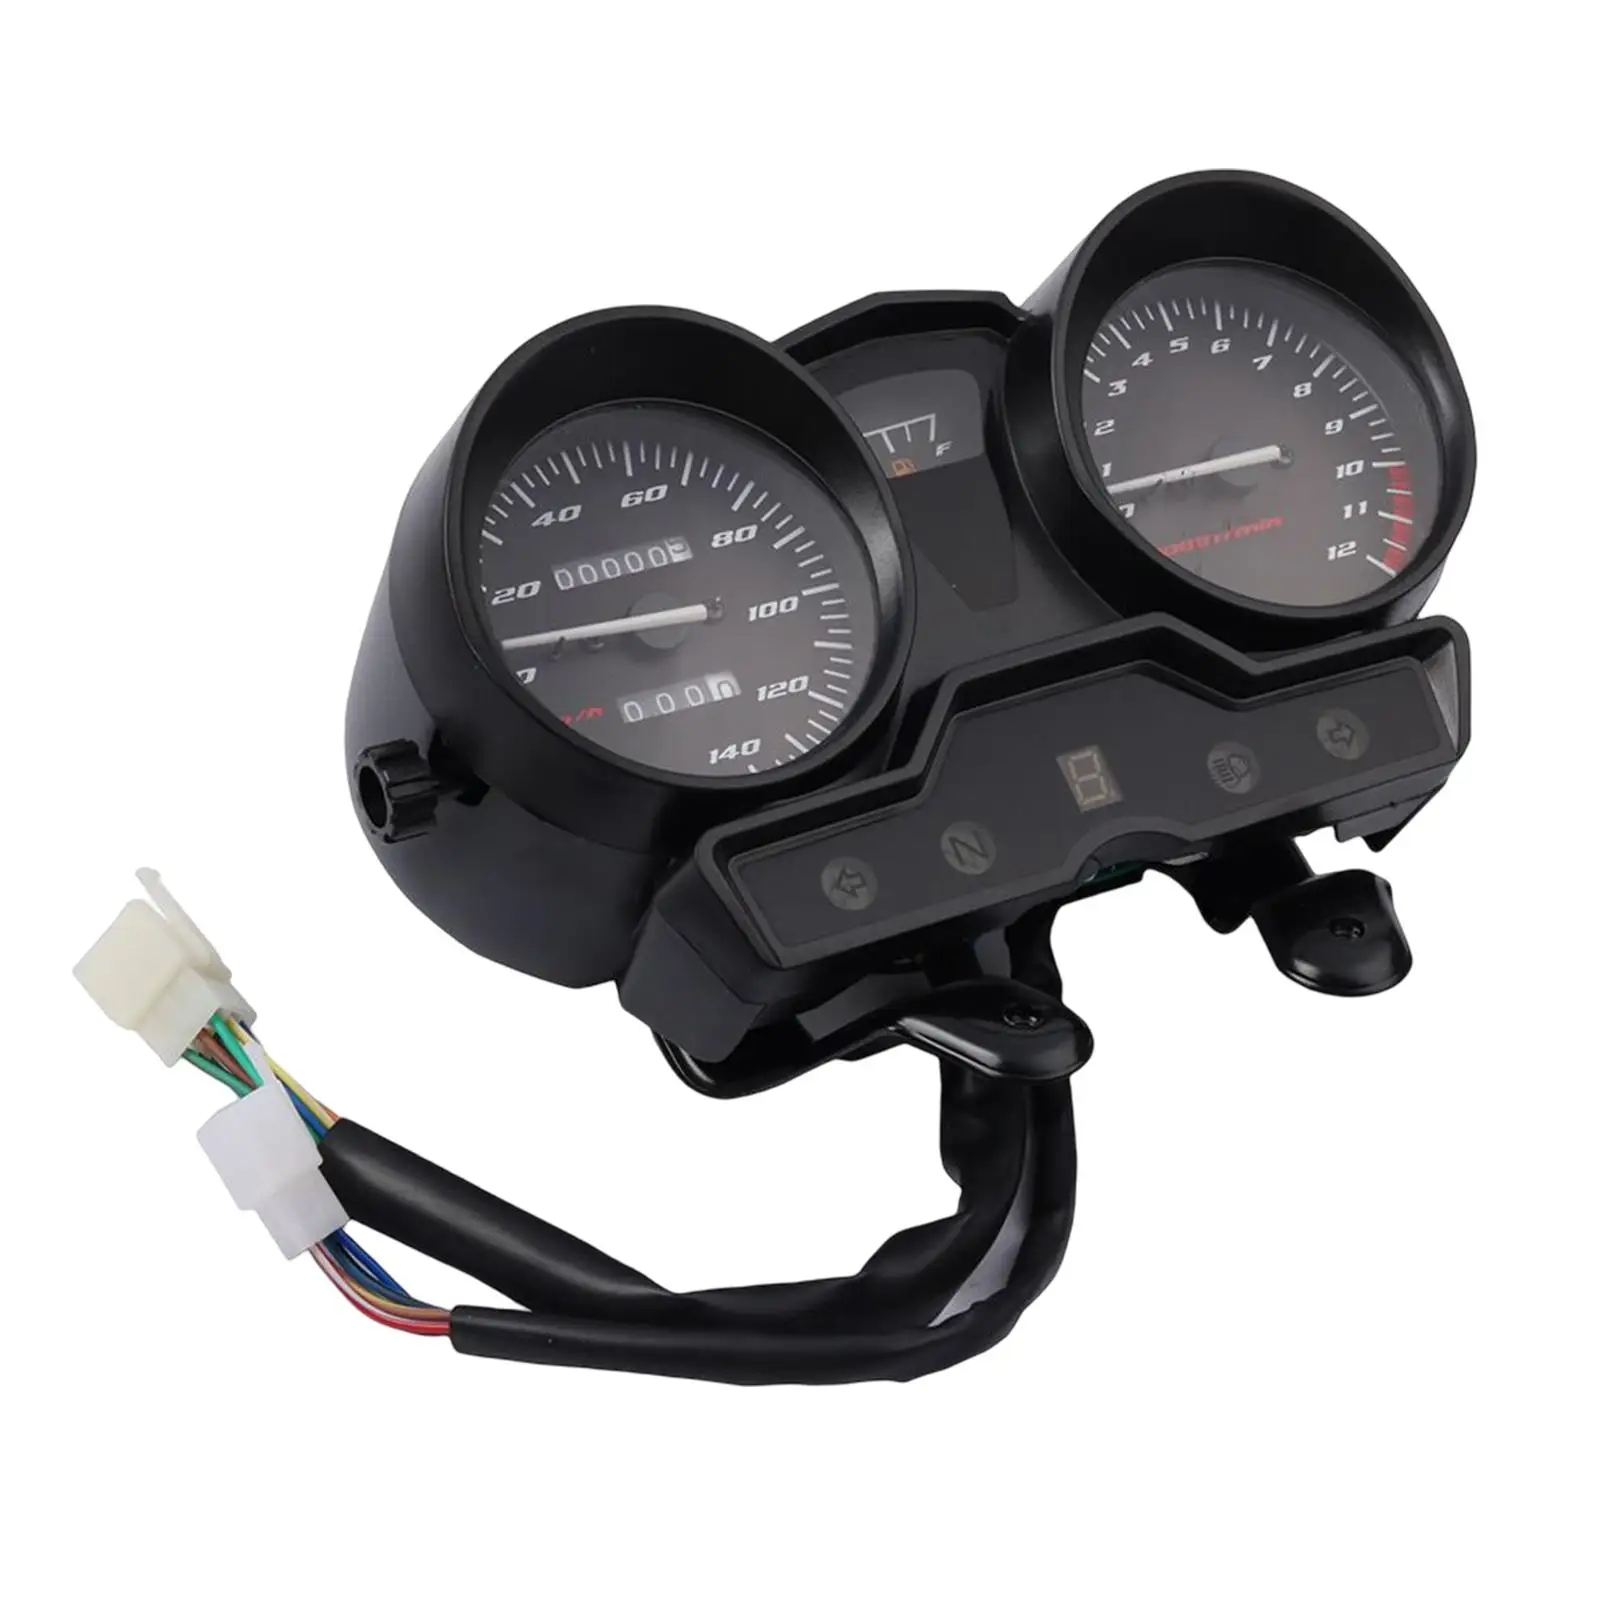 Digital Dashboard Speedometer Guage Motorcycle RPM Meter with Gear Display